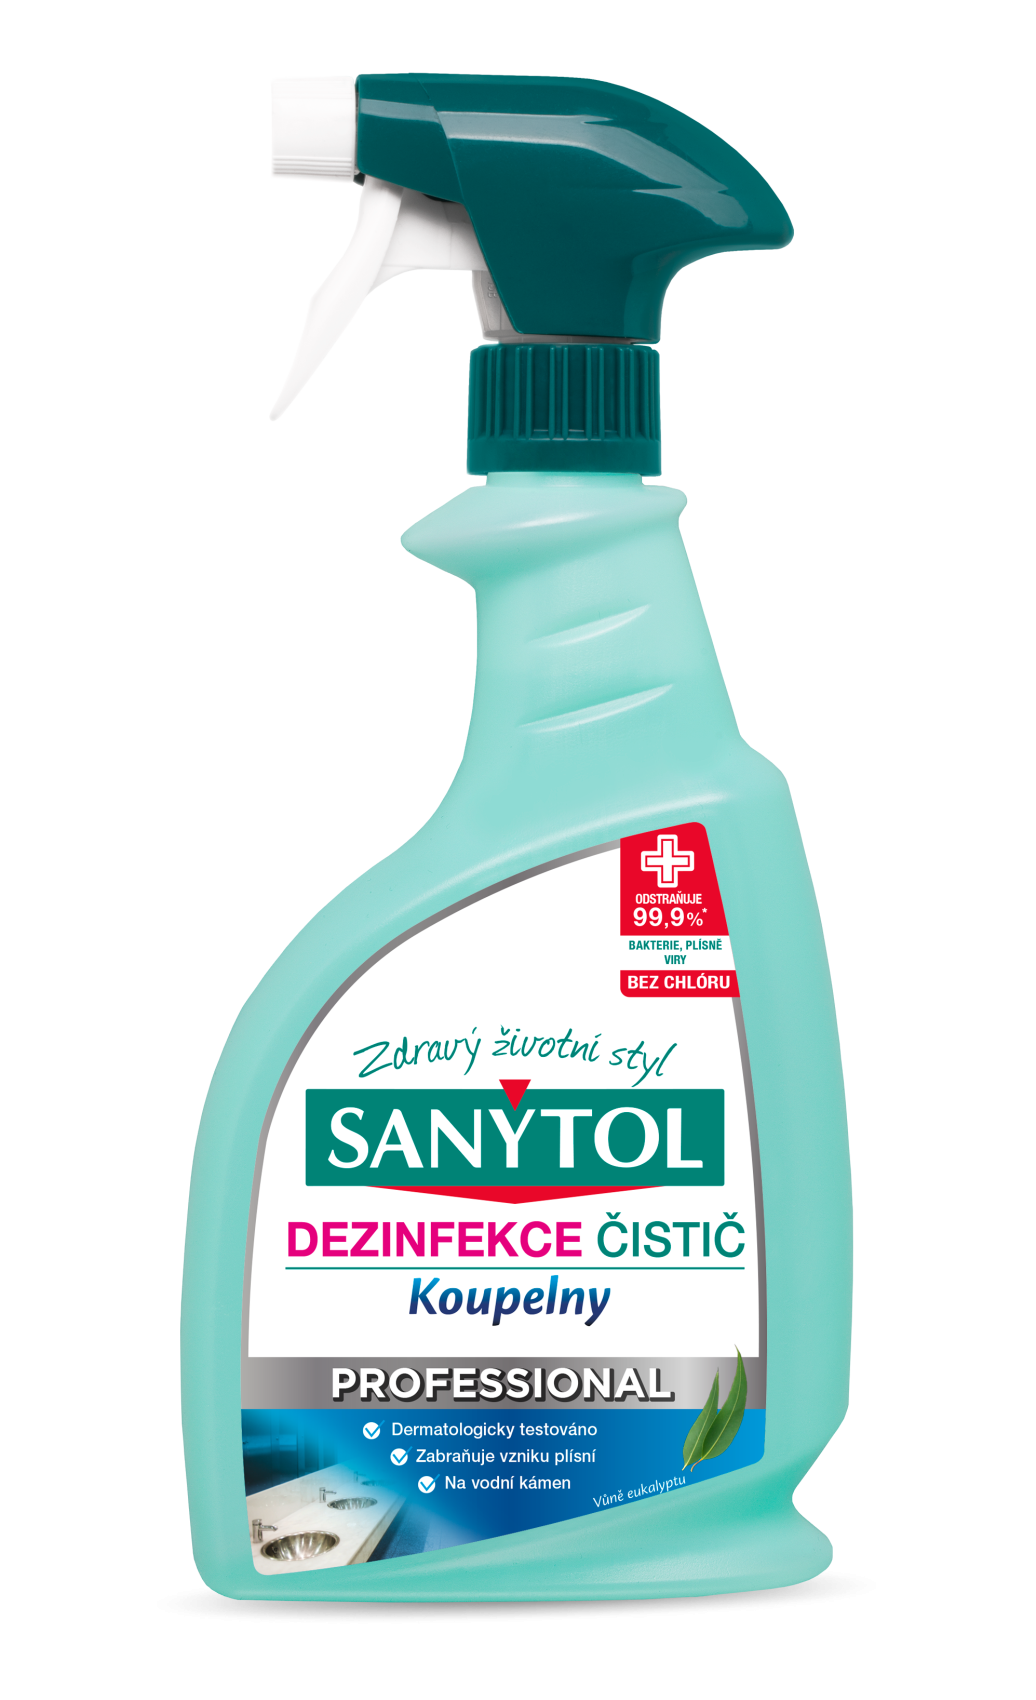 Sanytol Professional dezinfekce na koupelny 750ml - Kliknutm na obrzek zavete